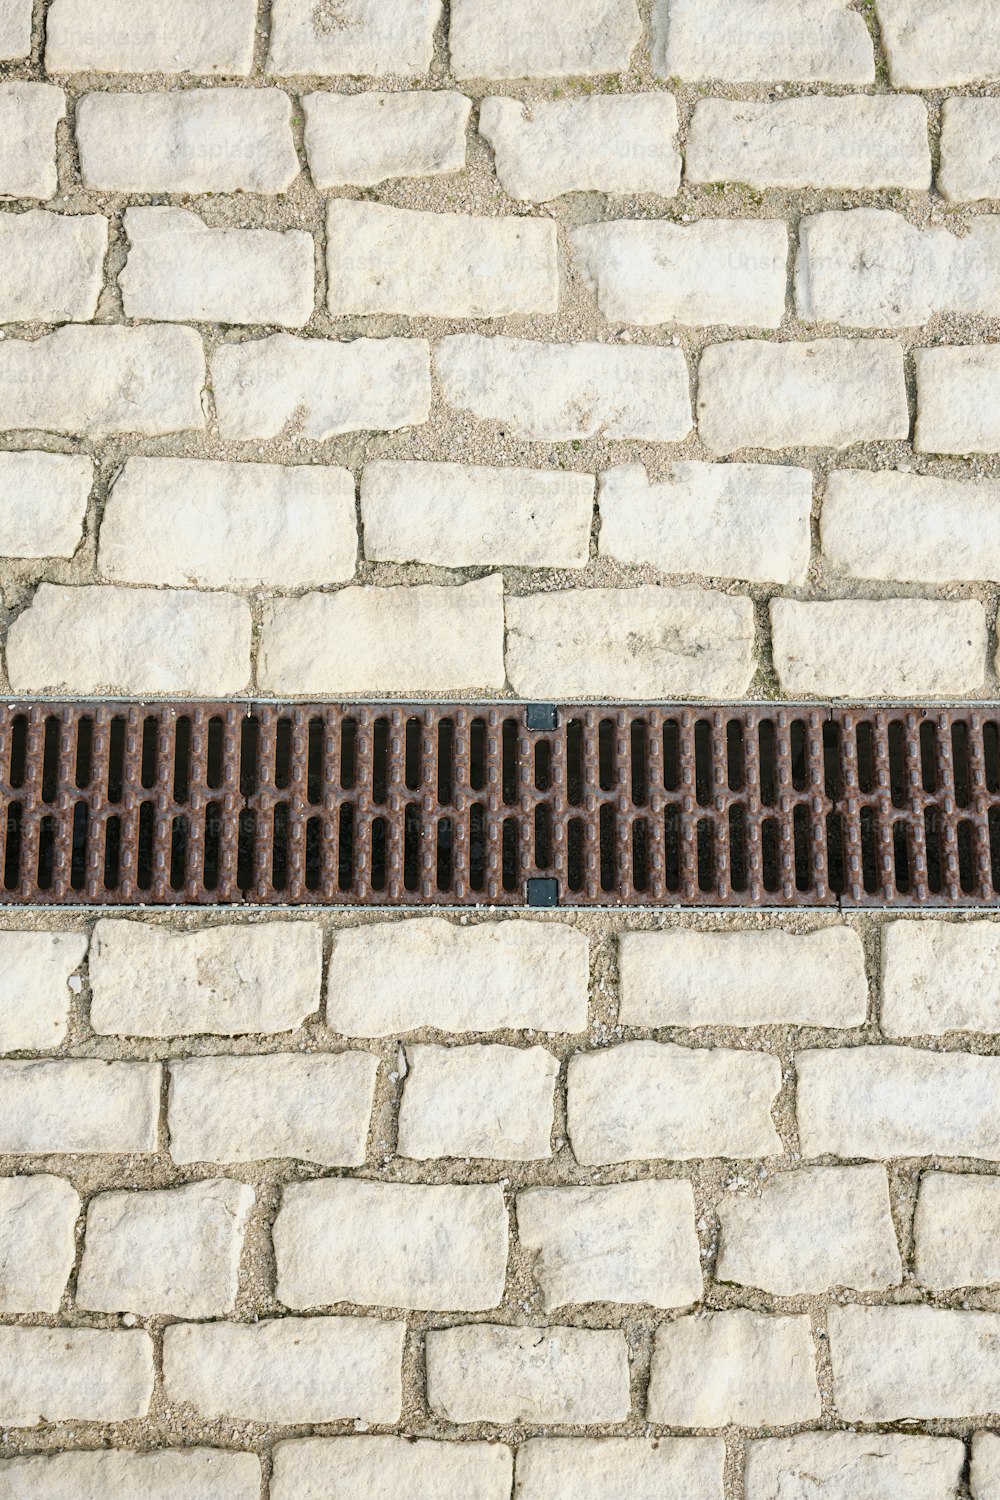 a manhole cover on a cobblestone street